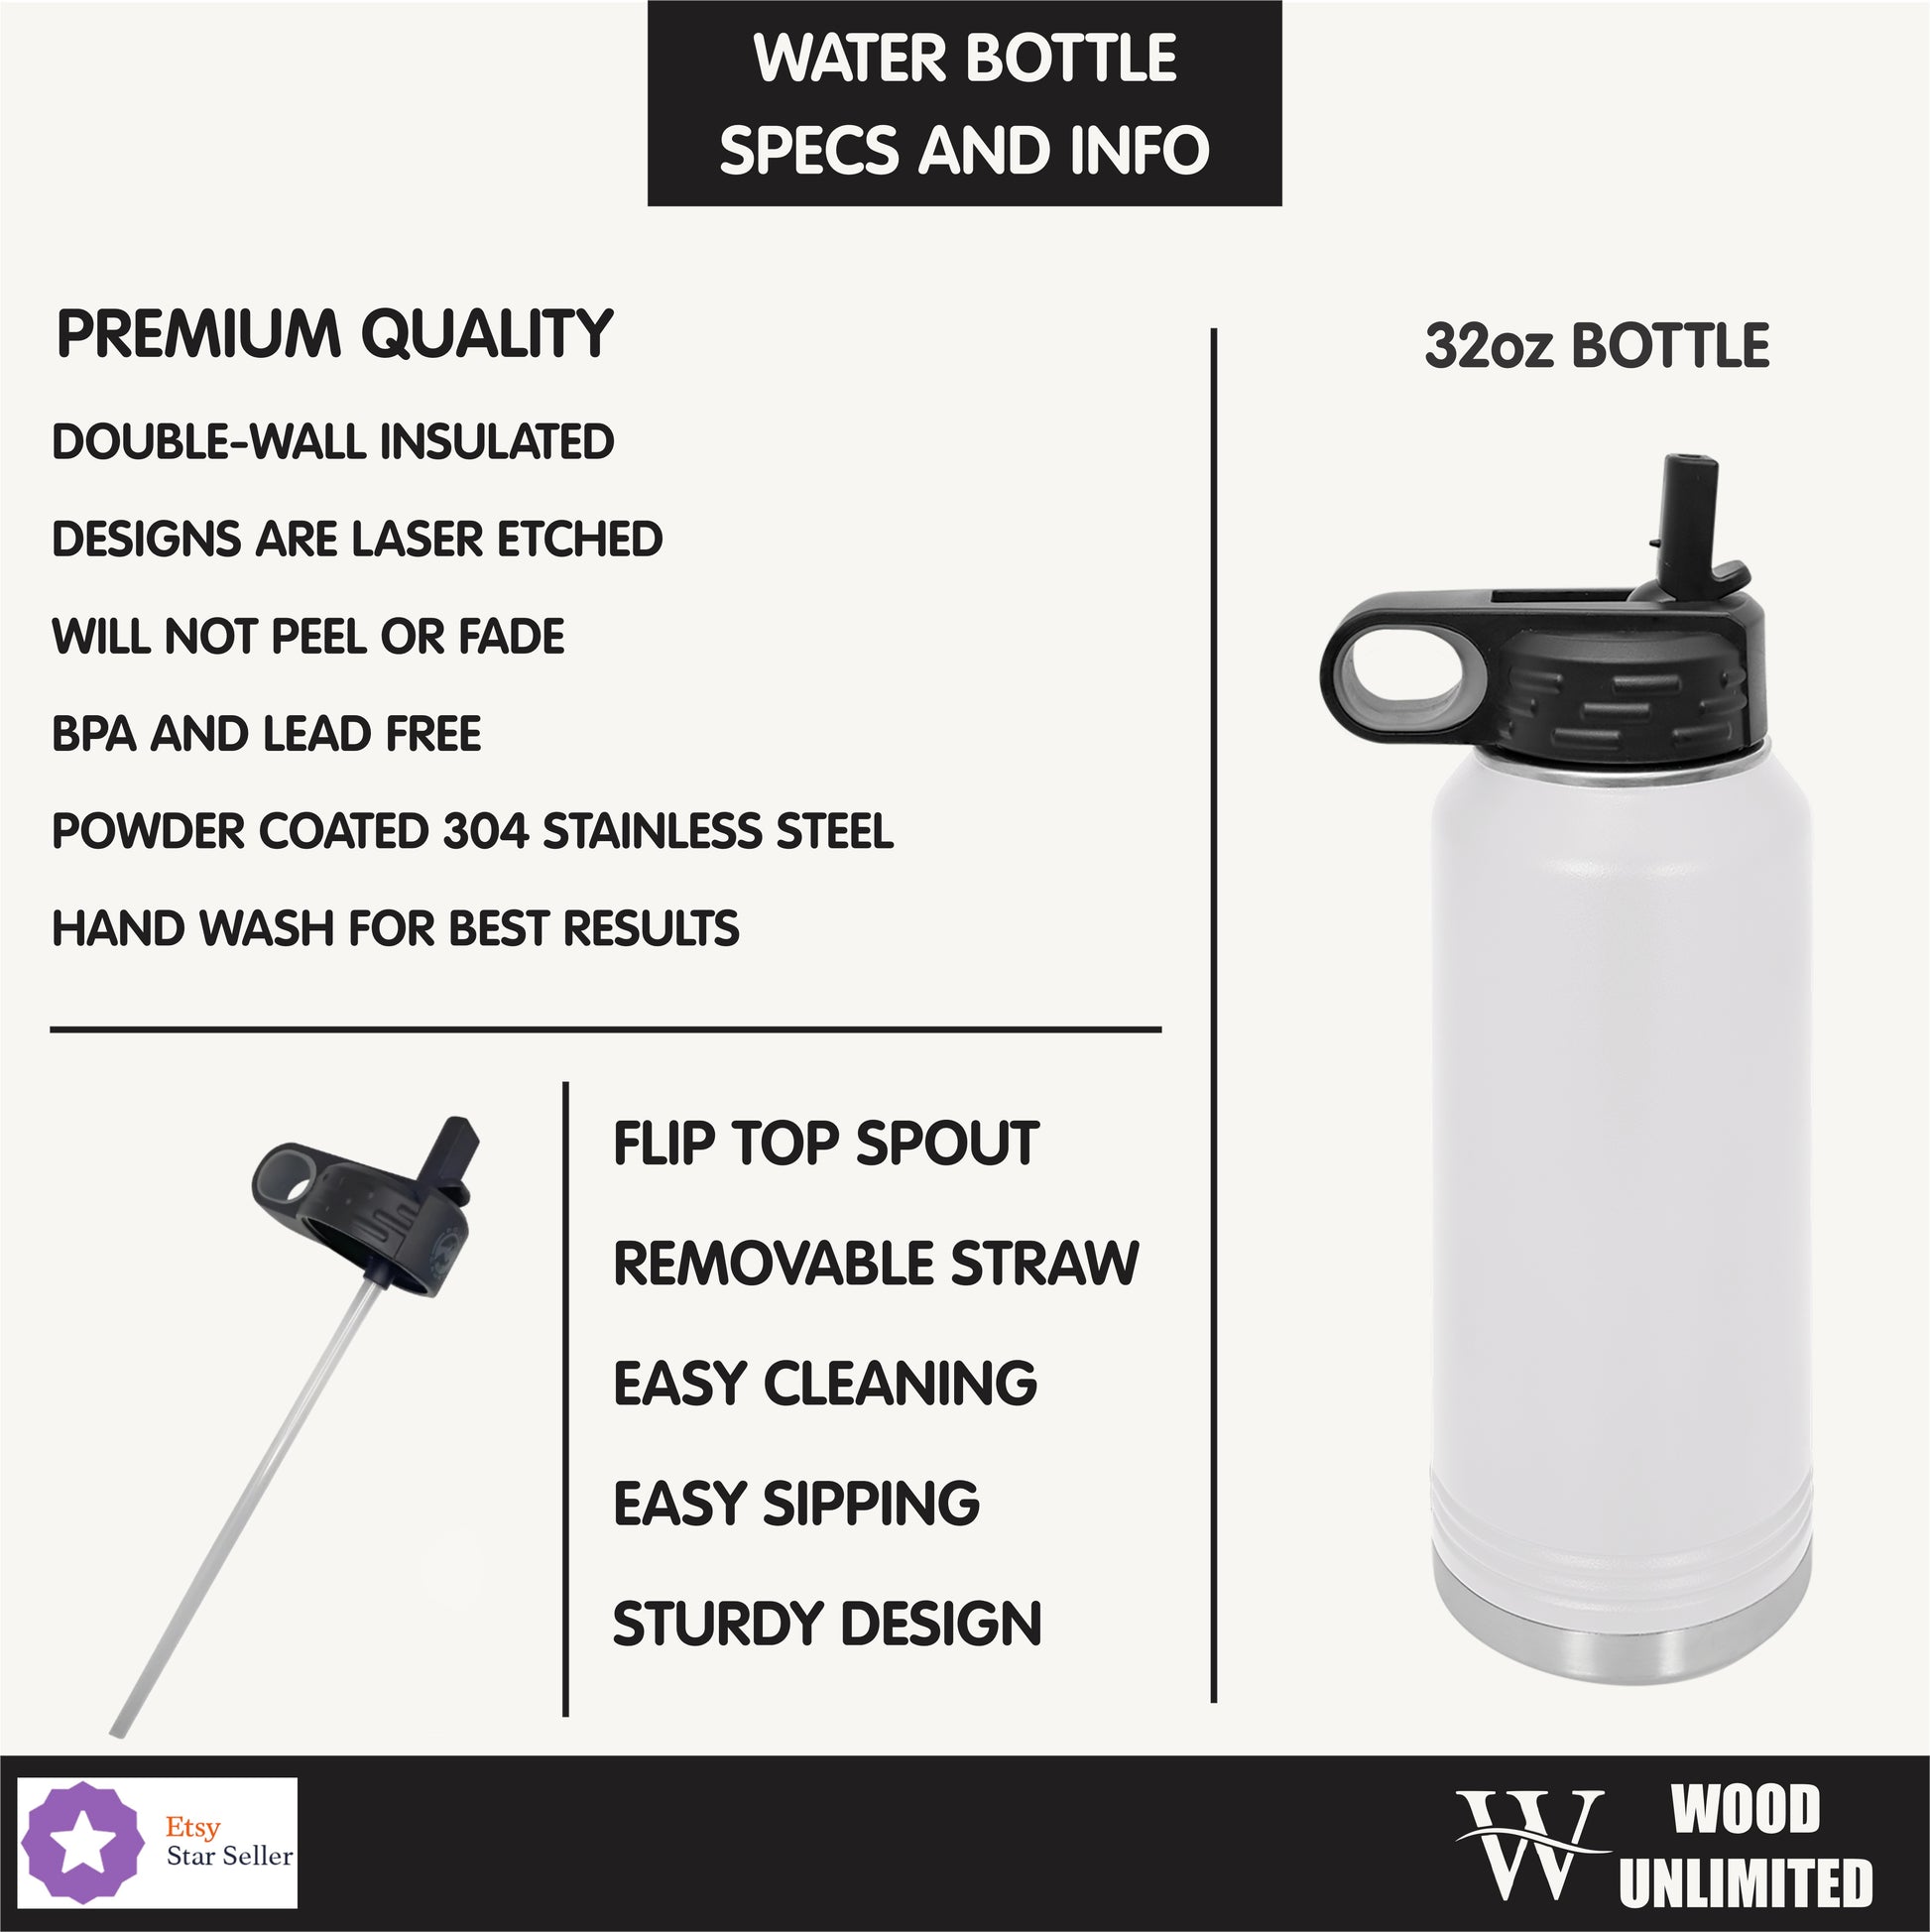 Wood Unlimited - White Water bottle infographic, mom bottle, birth flower water bottle gift